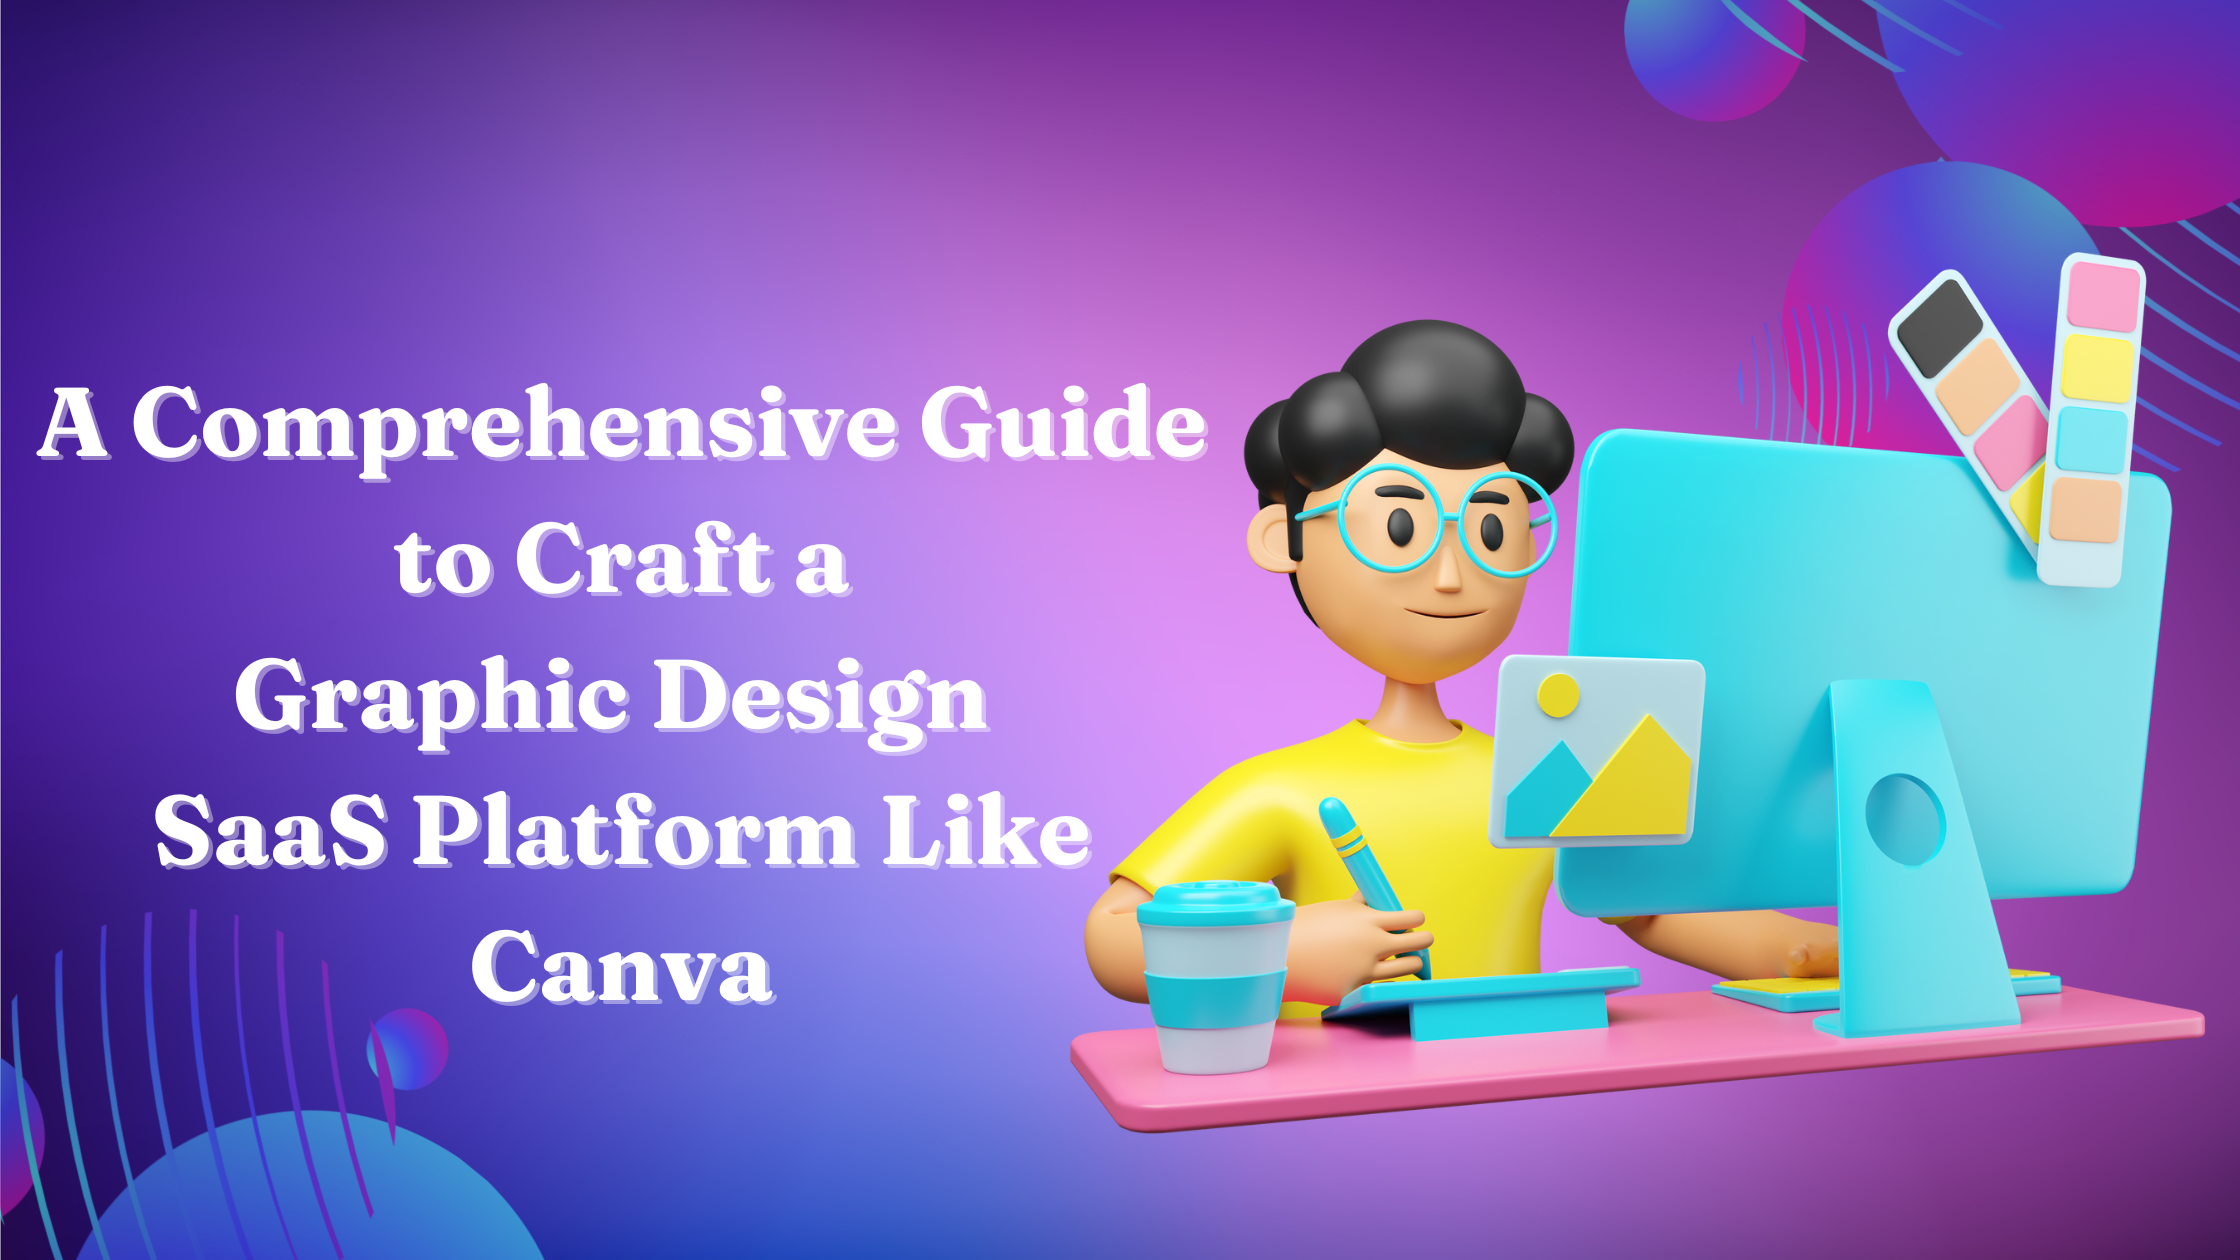 A Comprehensive Guide to Craft a Graphic Design SaaS Platform Like Canva